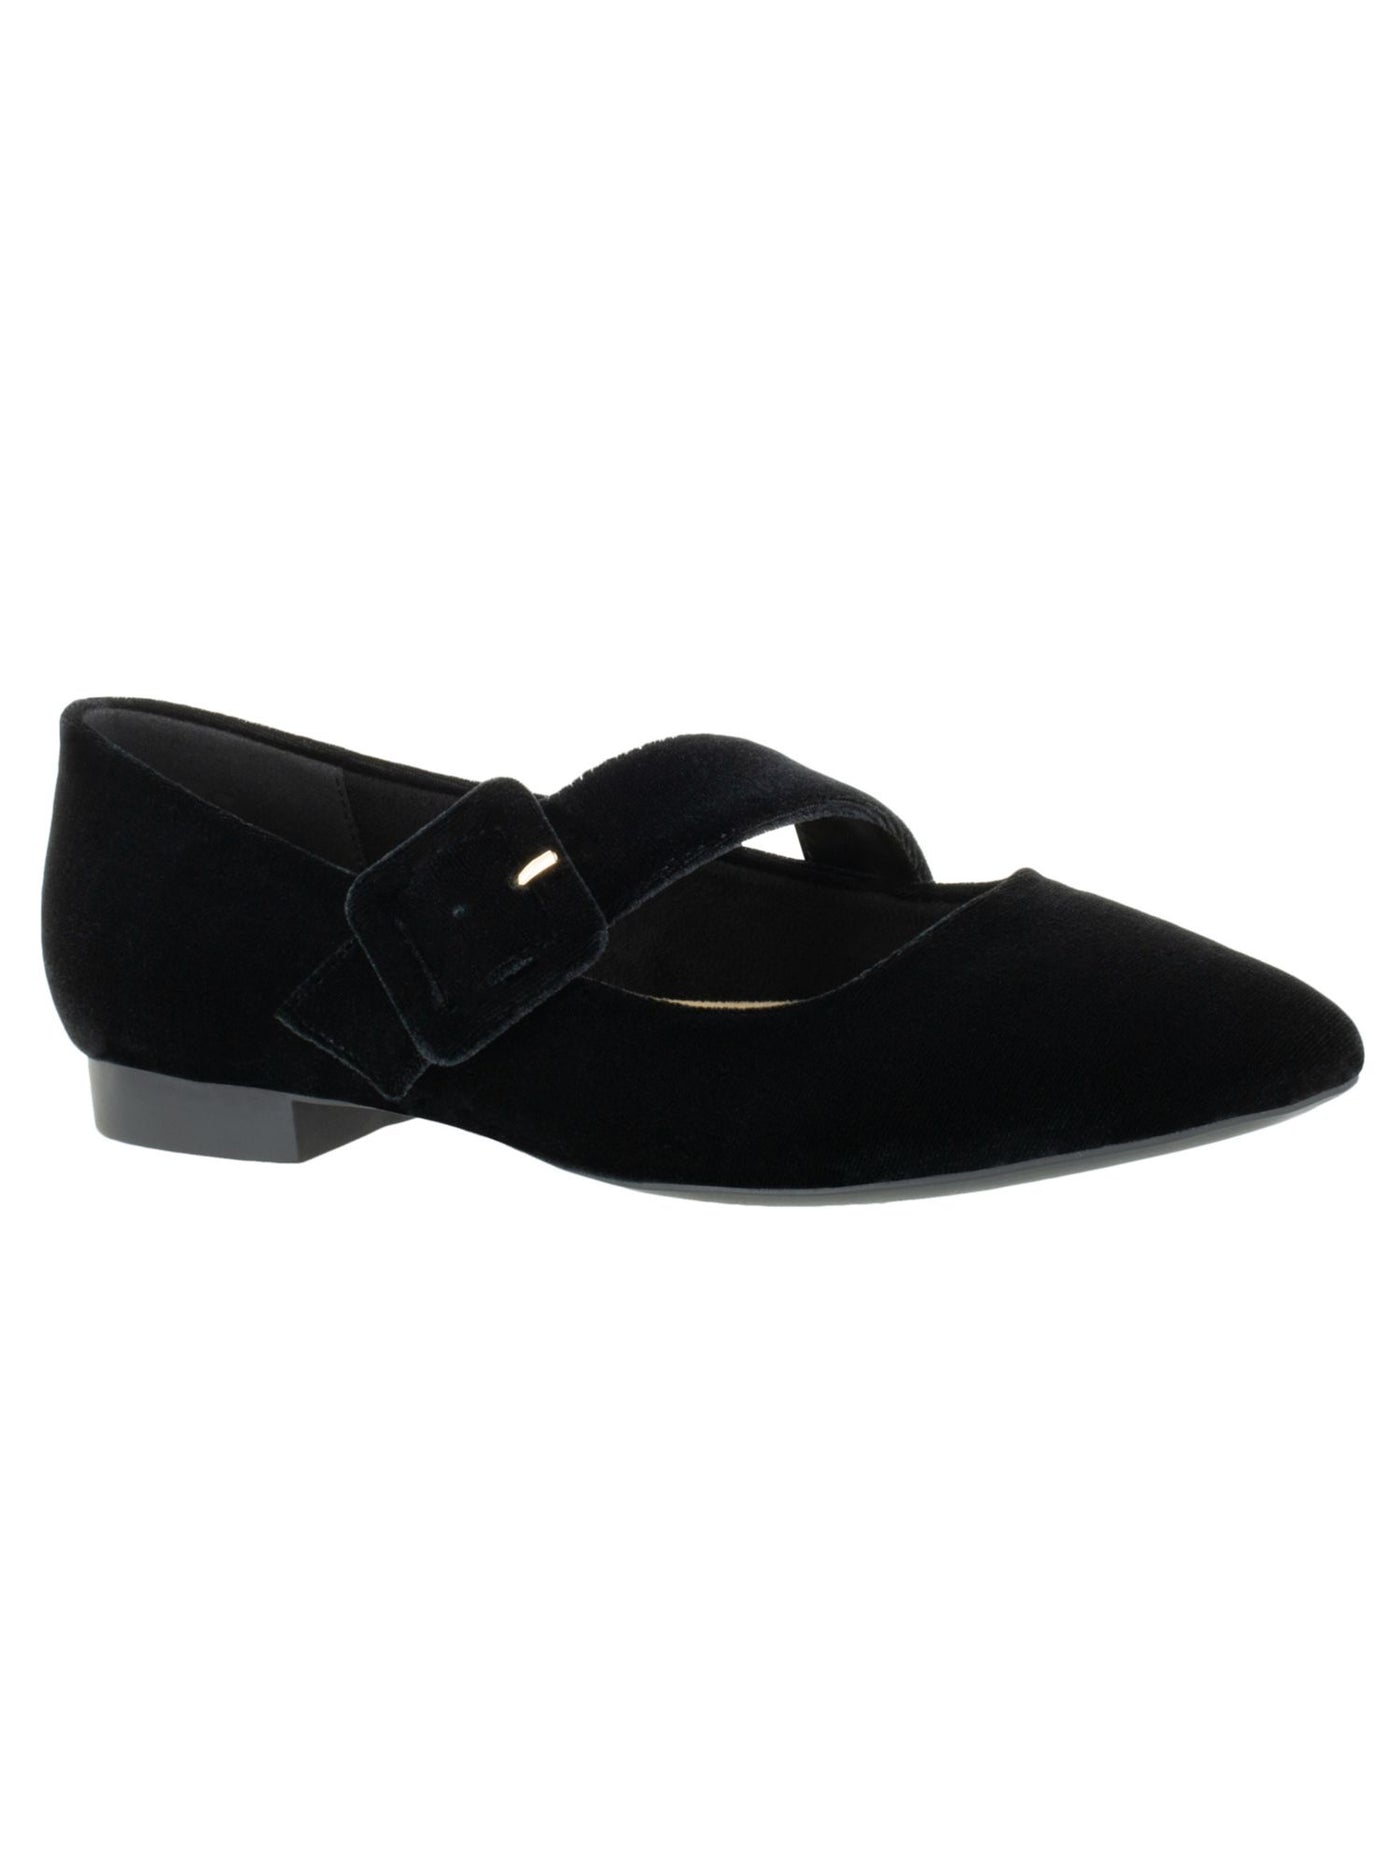 BELLA VITA Womens Black Mary Jane Padded Virginia Ii Pointed Toe Buckle Flats Shoes 11 M